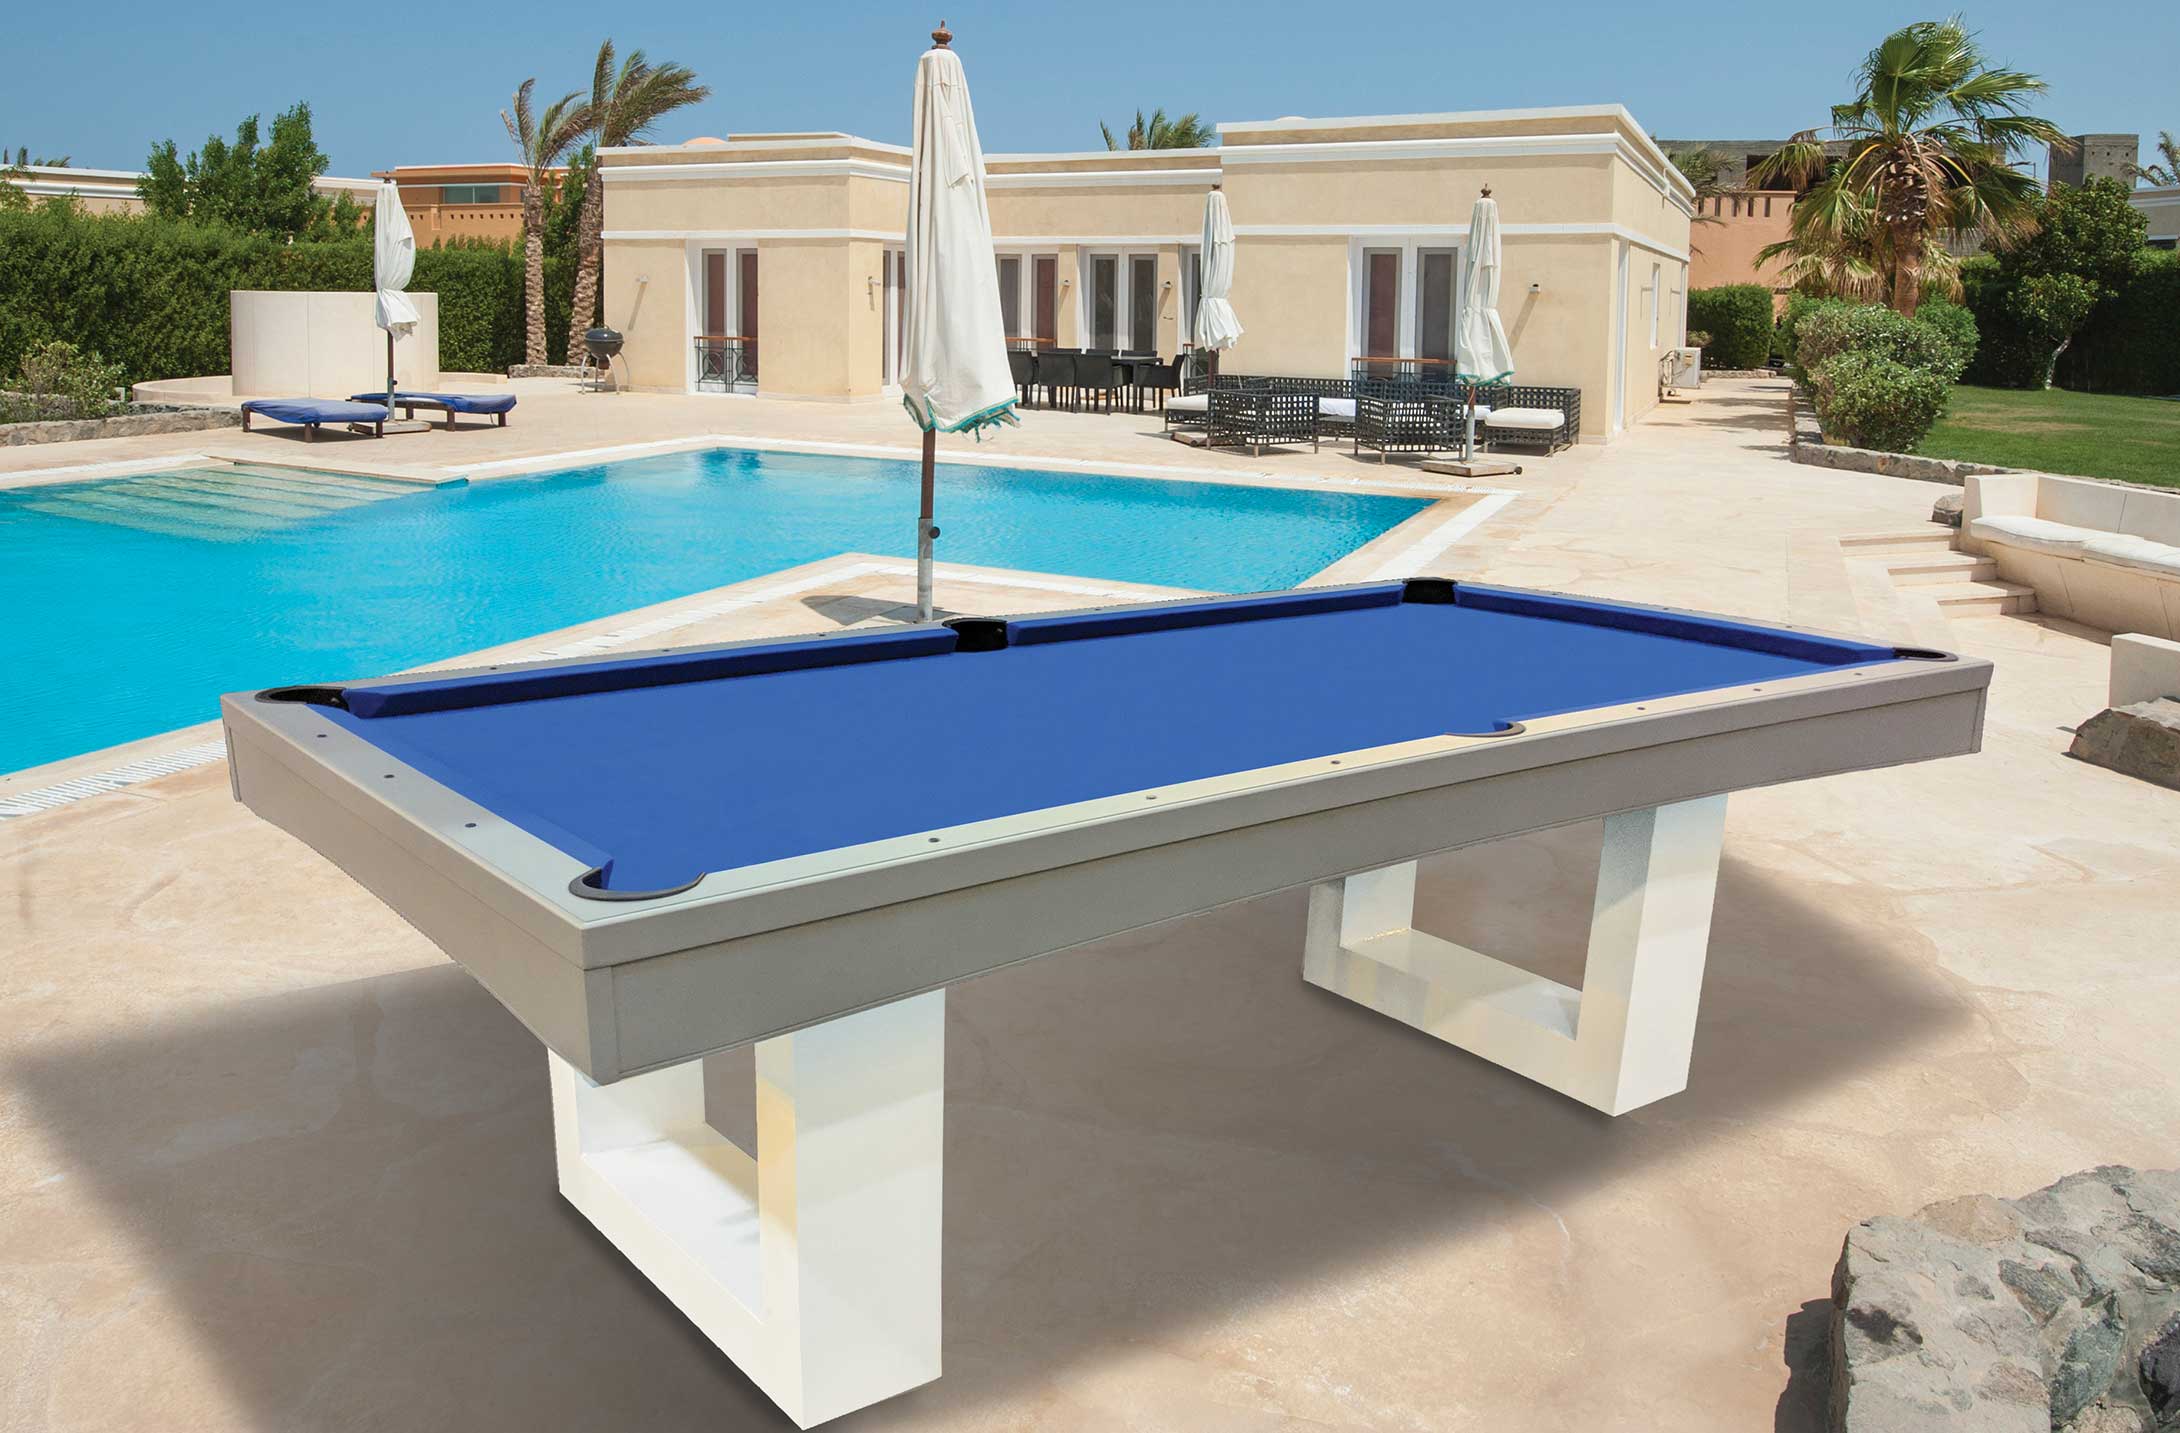 horizon-outdoor-pool-table-randroutdoors-all-weather-billiards-3.jpg